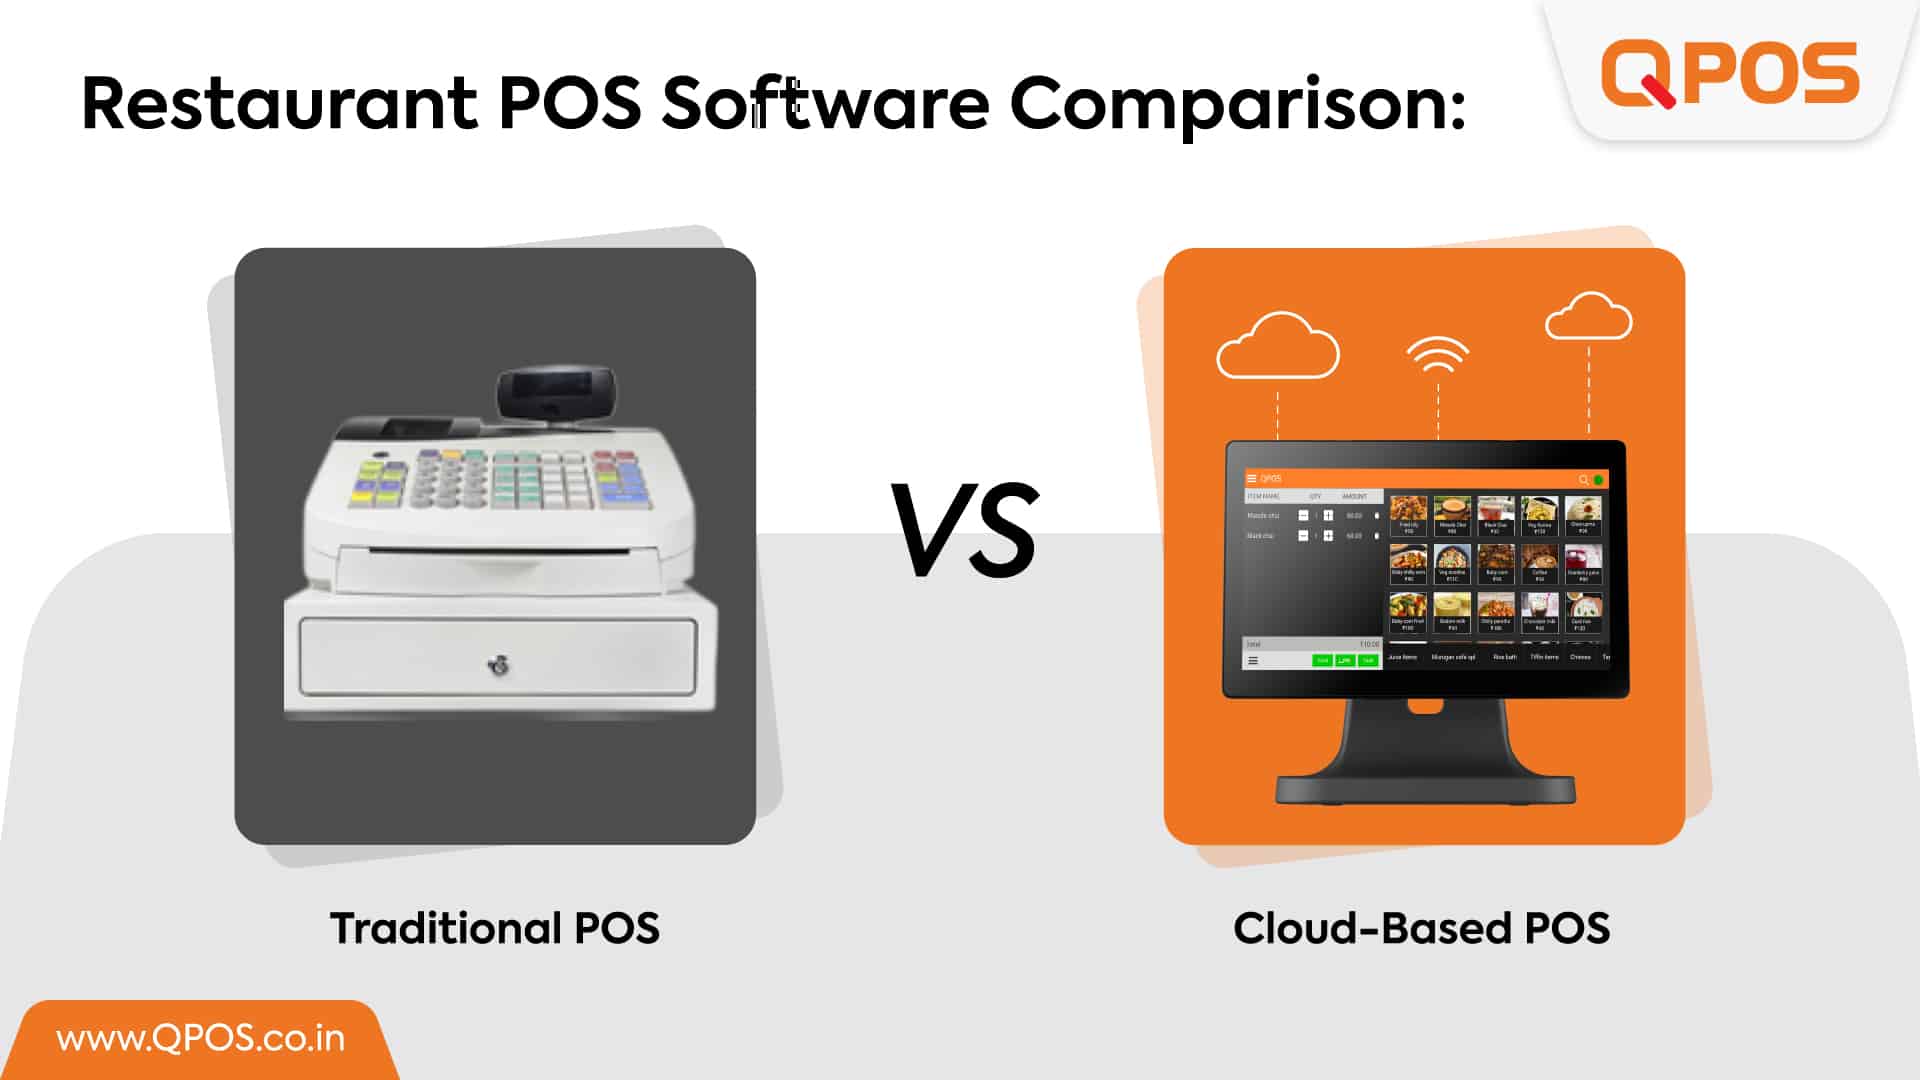 Restaurant POS Software Comparison: Traditional POS vs Cloud-Based POS